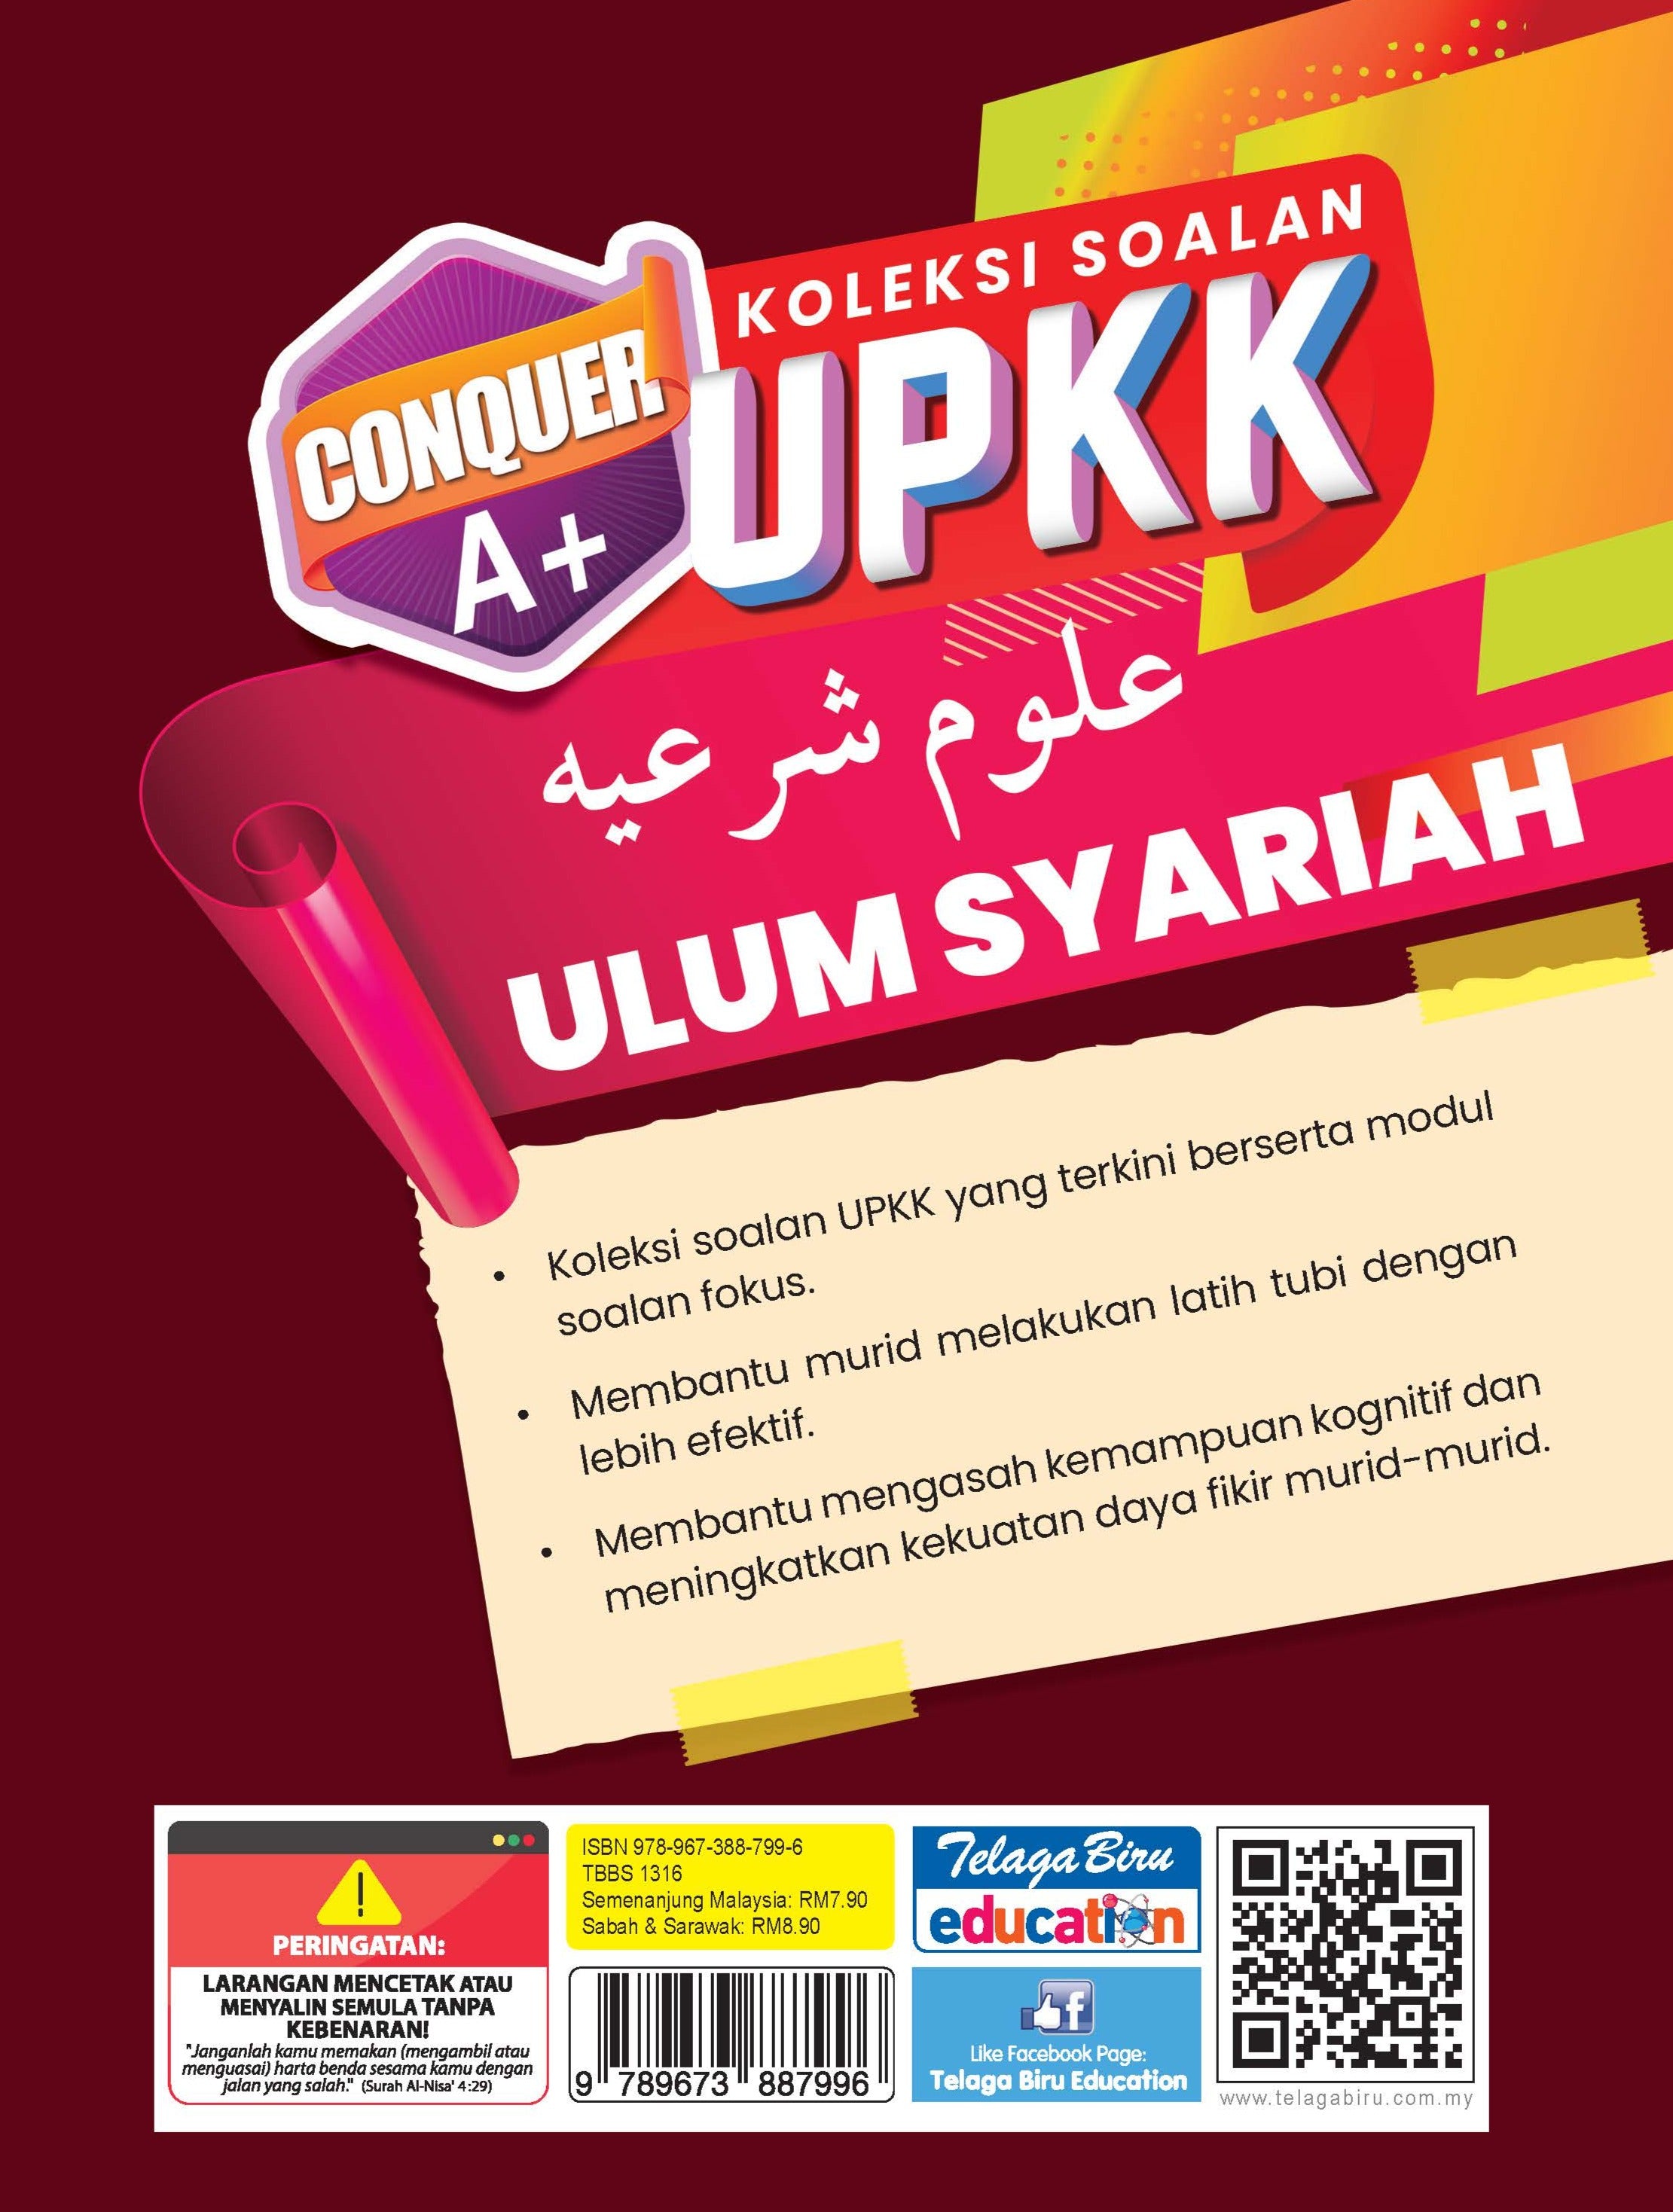 Conquer A+ Koleksi Soalan UPKK (Ulum Syariah) - (TBBS1316)